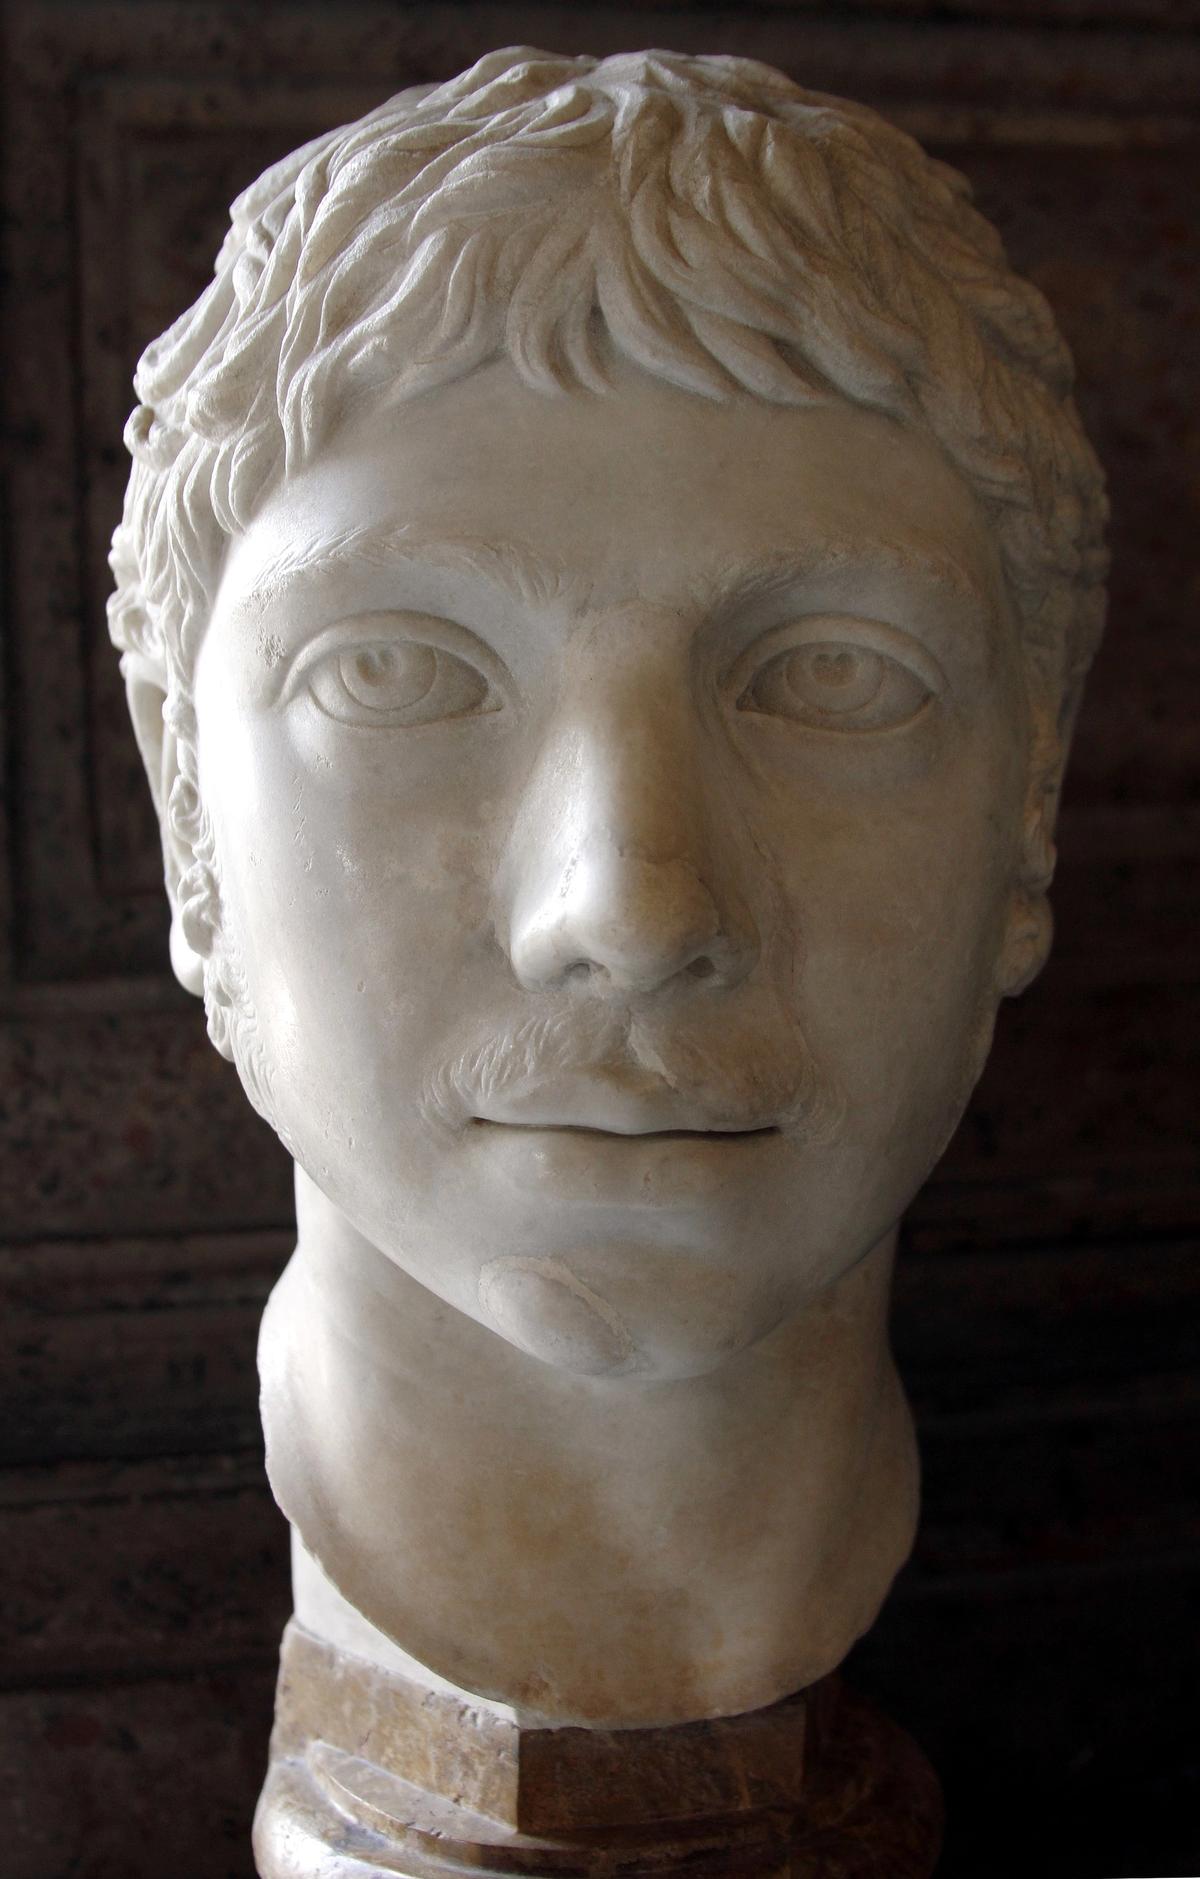 Elagabalus's gender identity has long been a source of academic debate

Photo: José Luiz via Wikimedia Commons